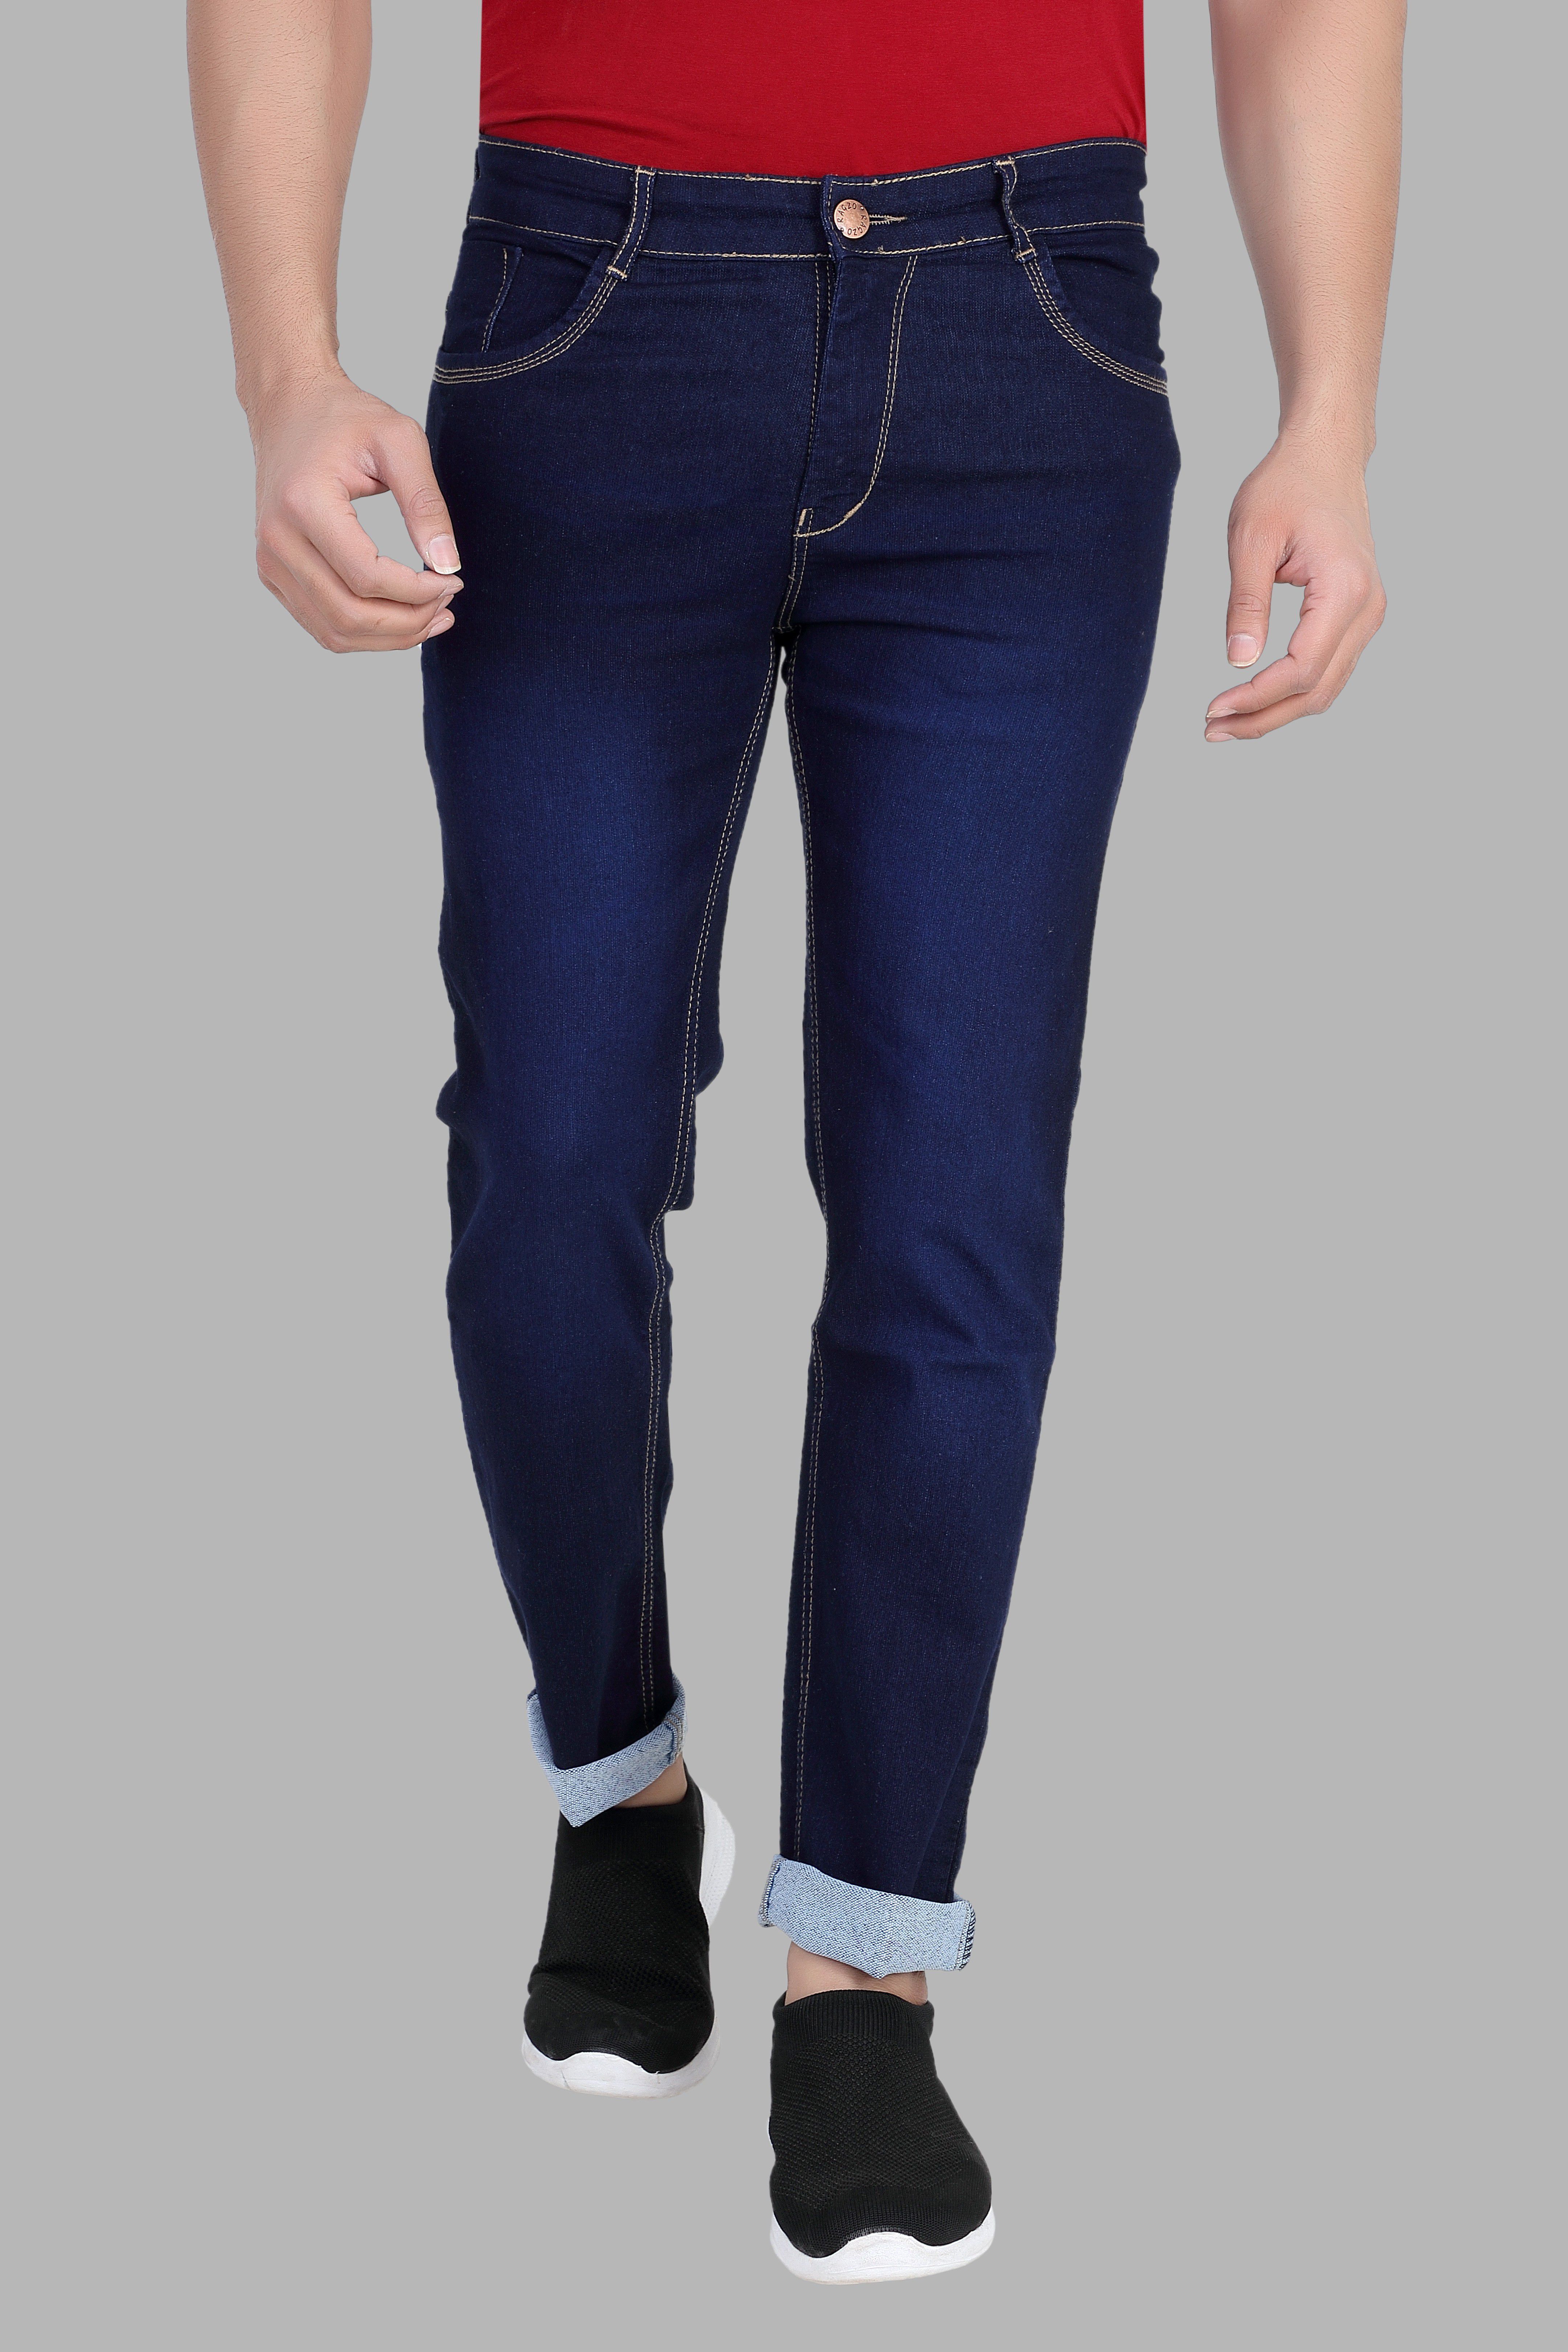 RAGZO - Dark Blue Denim Slim Fit Men's Jeans ( Pack of 1 )